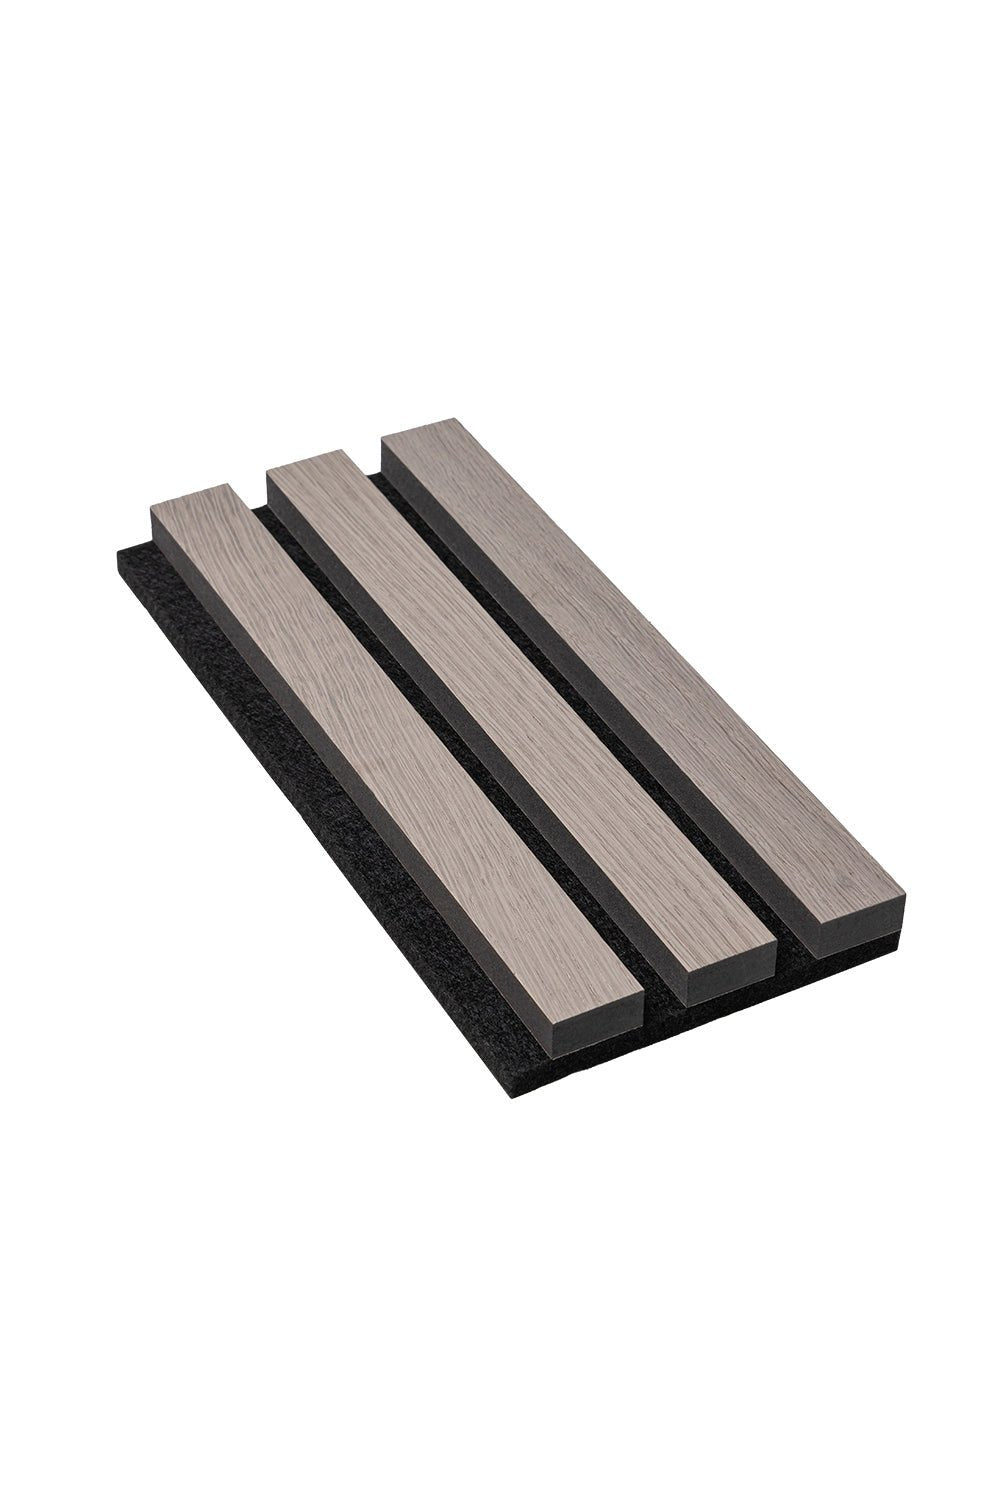 A small sample of a Grey Oak SlatWall Panel, made of three small individual slats on a felt backing.